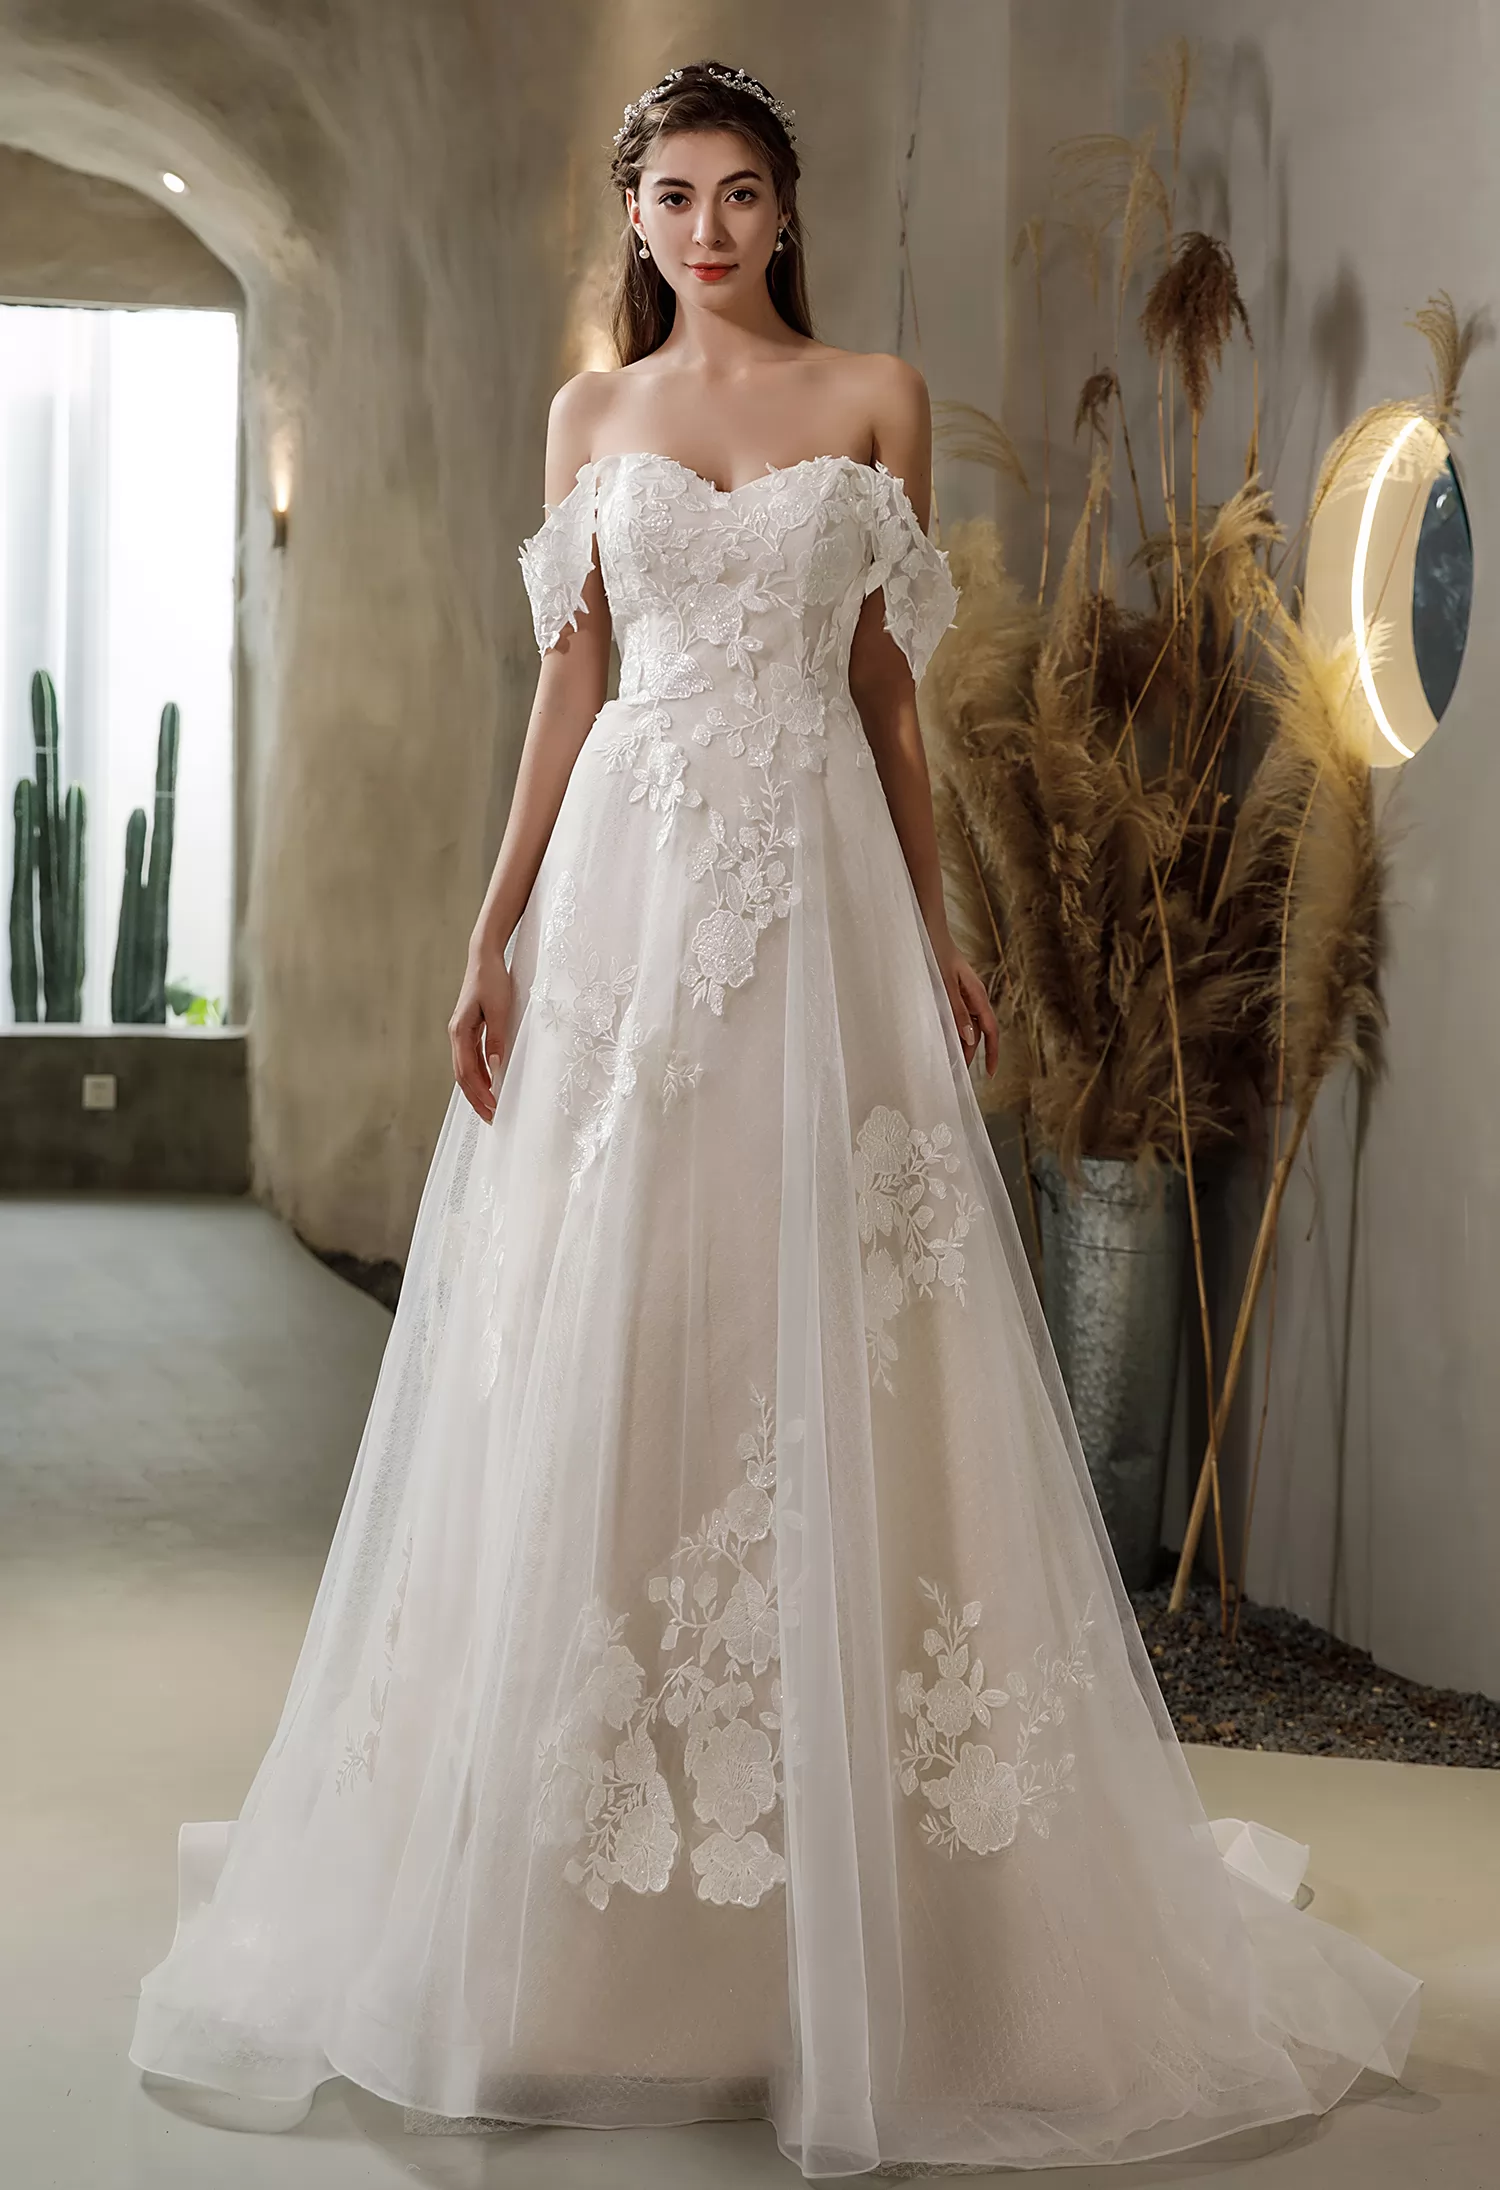 Floral Lace Wedding Dress With Detachable Off-the-Shoulder Straps